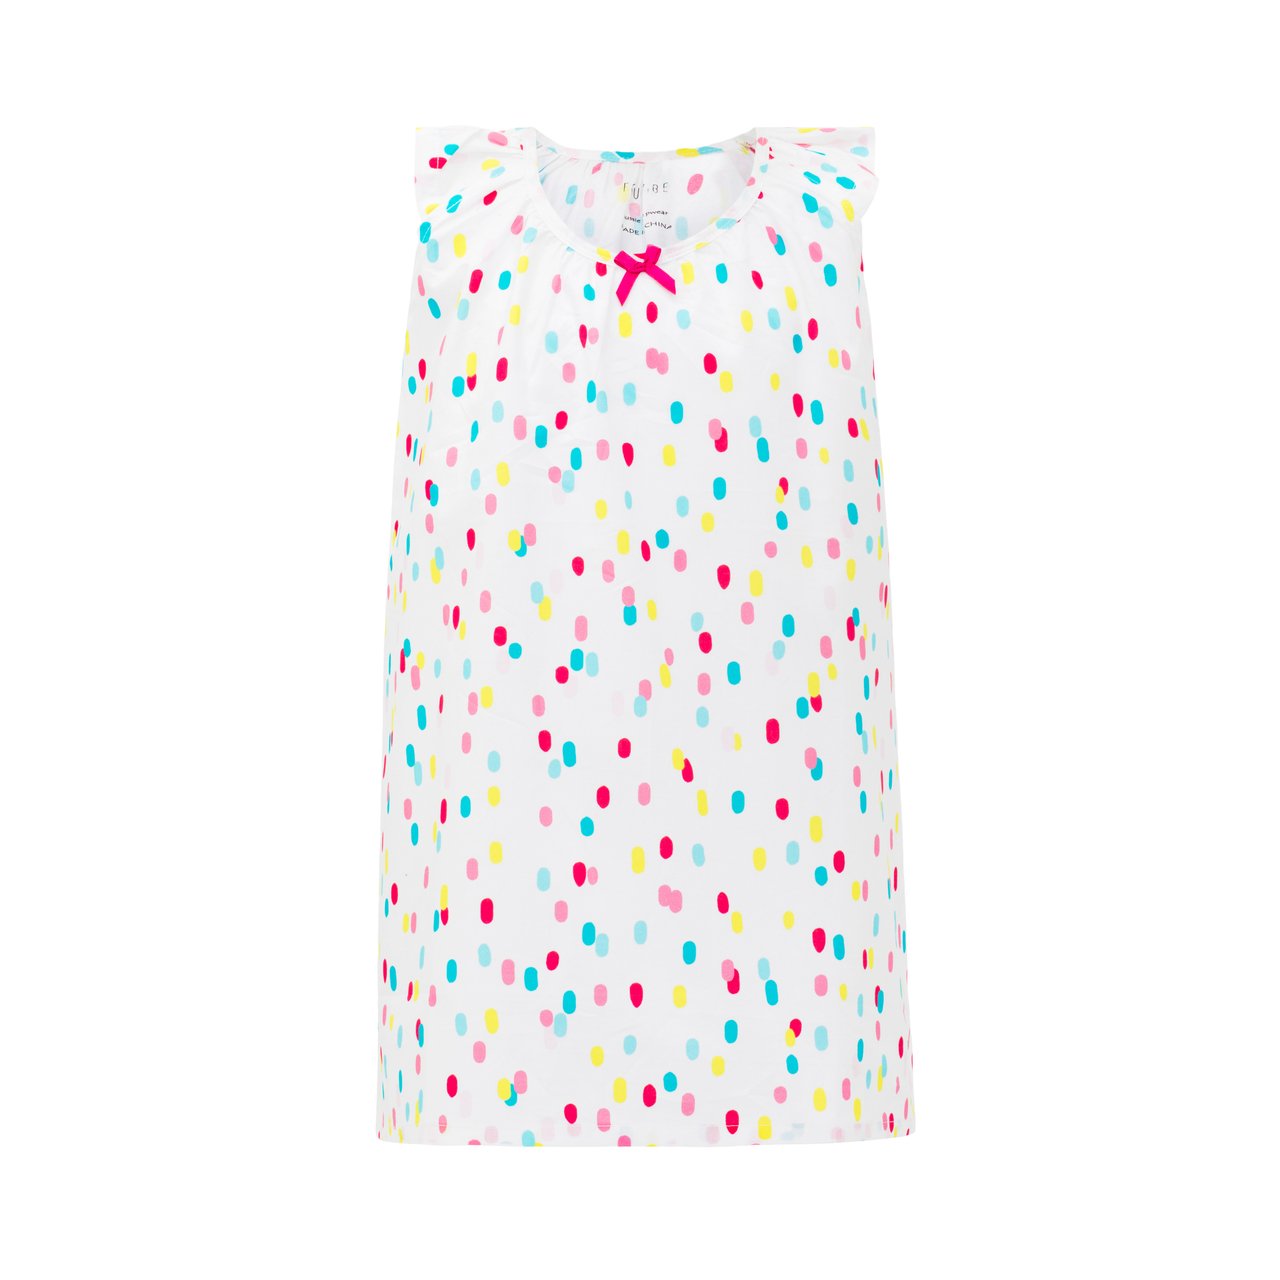 Girls 100% woven cotton summer nightie - Confetti